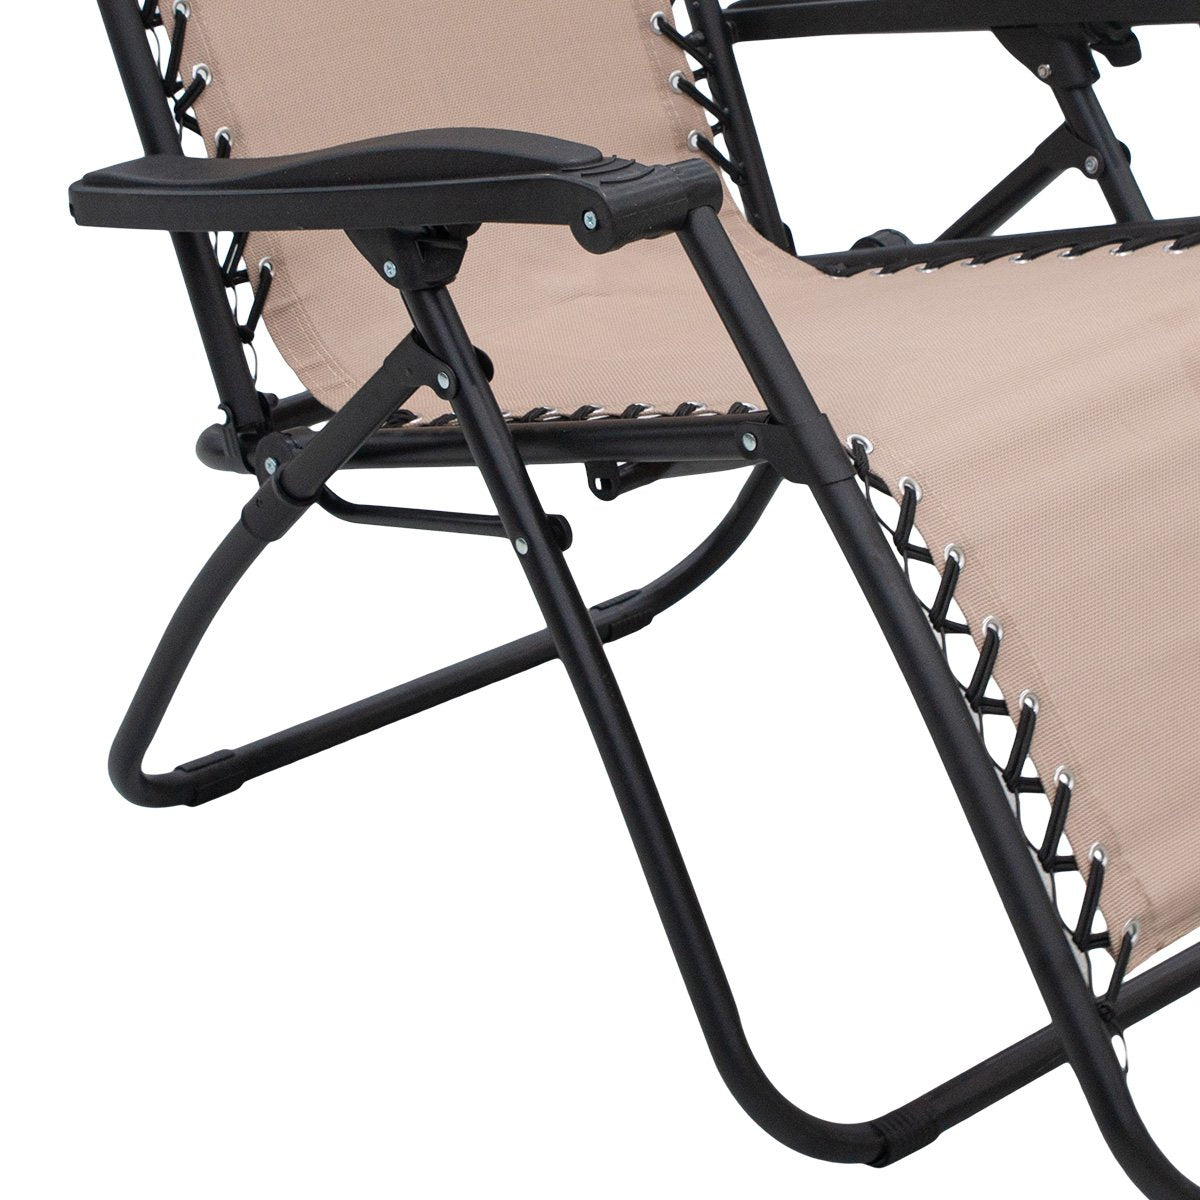 Wallaroo Zero Gravity Reclining Deck Lounge Sun Beach Chair Outdoor Folding Camping - Beige